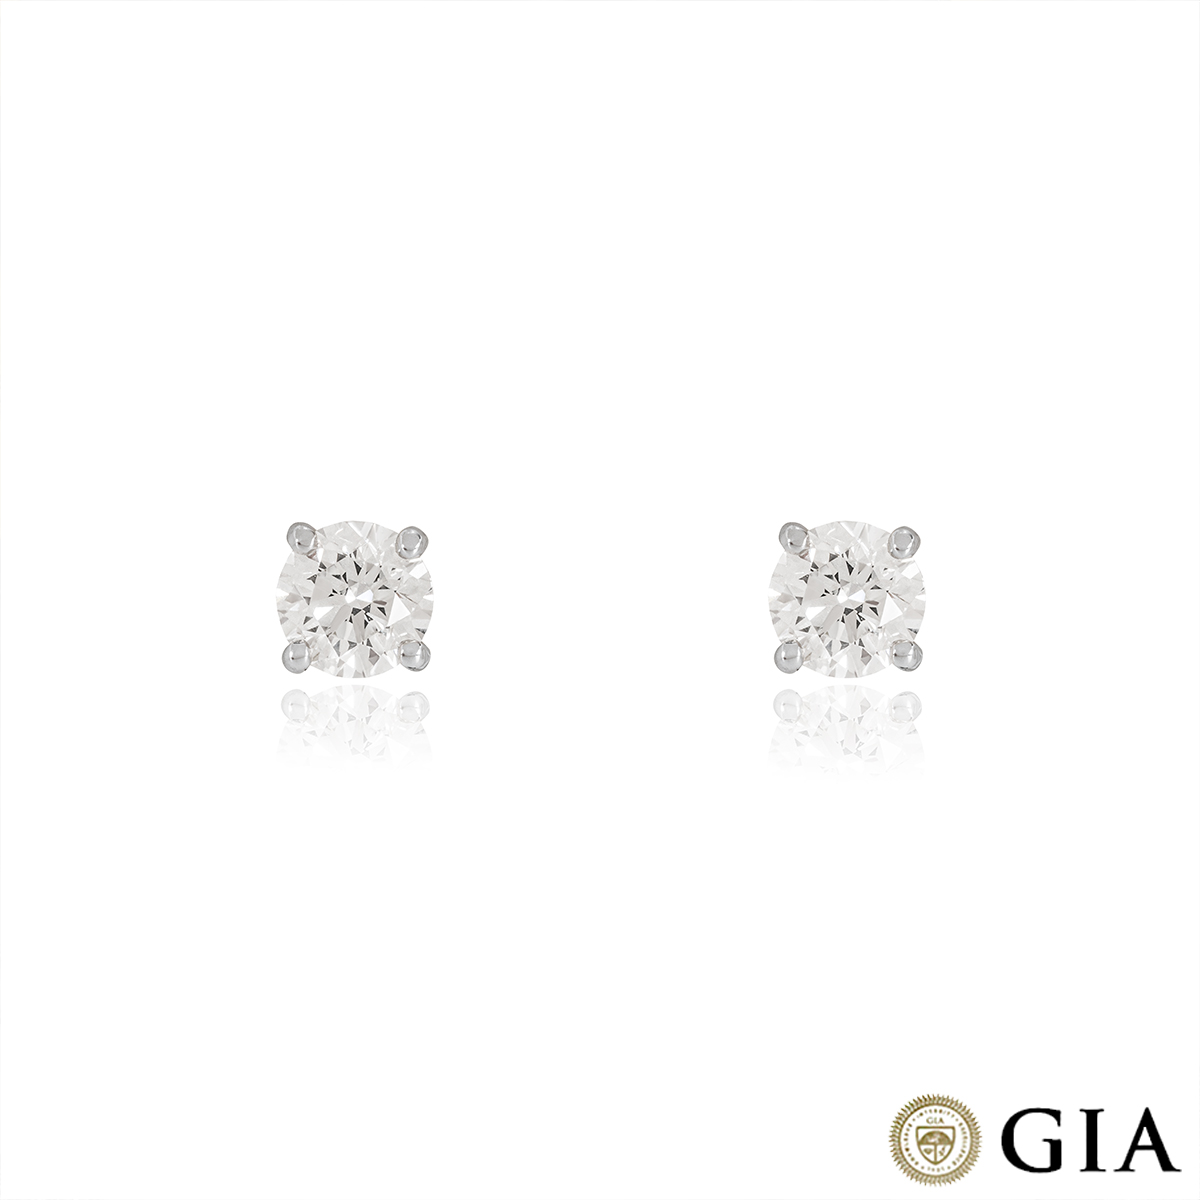 White Gold Round Brilliant Cut Diamond Earrings 1.41ct TDW